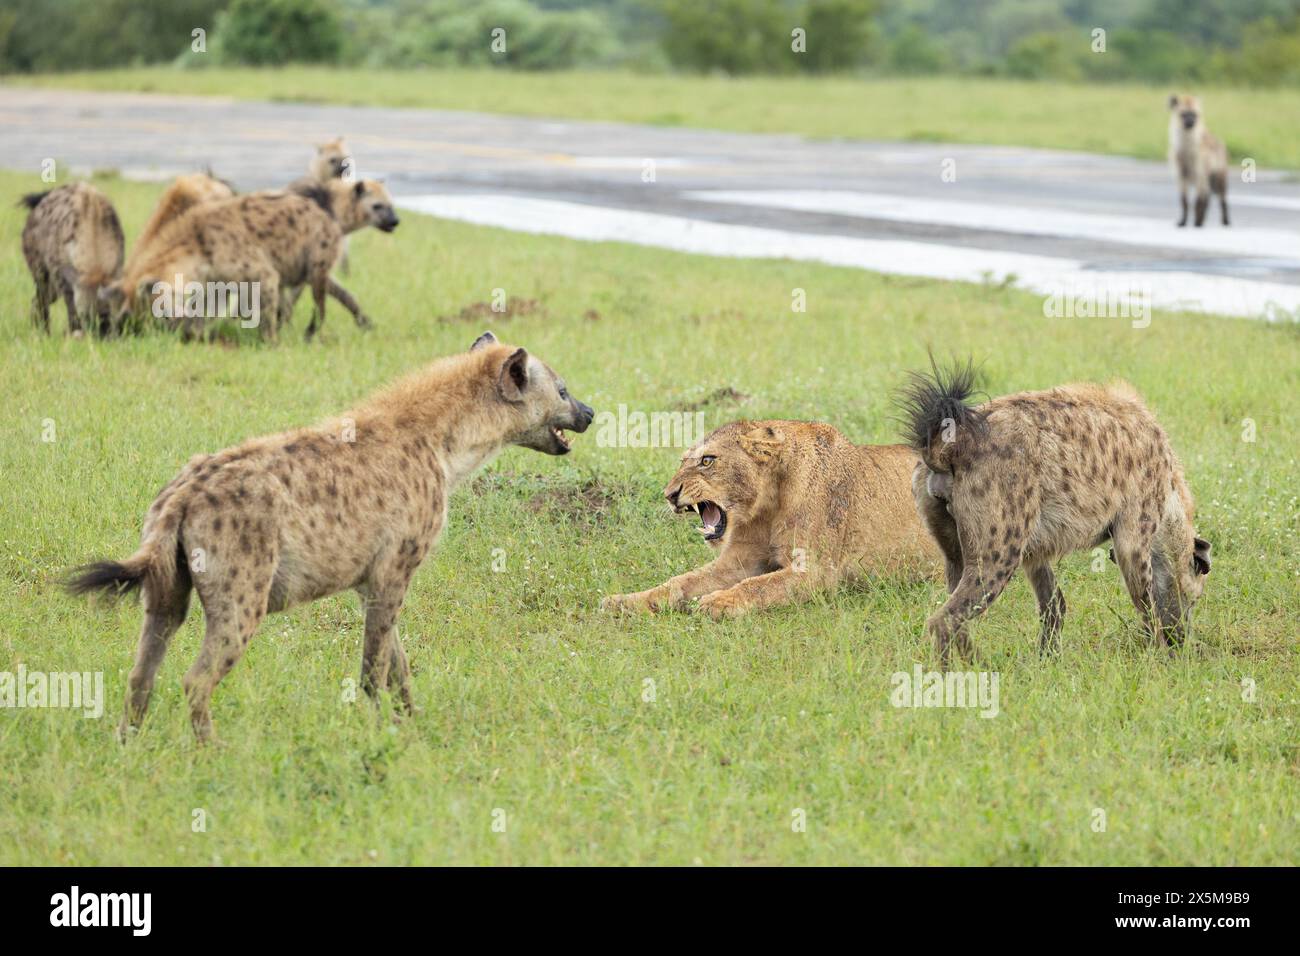 A lion, Panthera leo, and hyena, Hyaenidae, interaction. Stock Photo